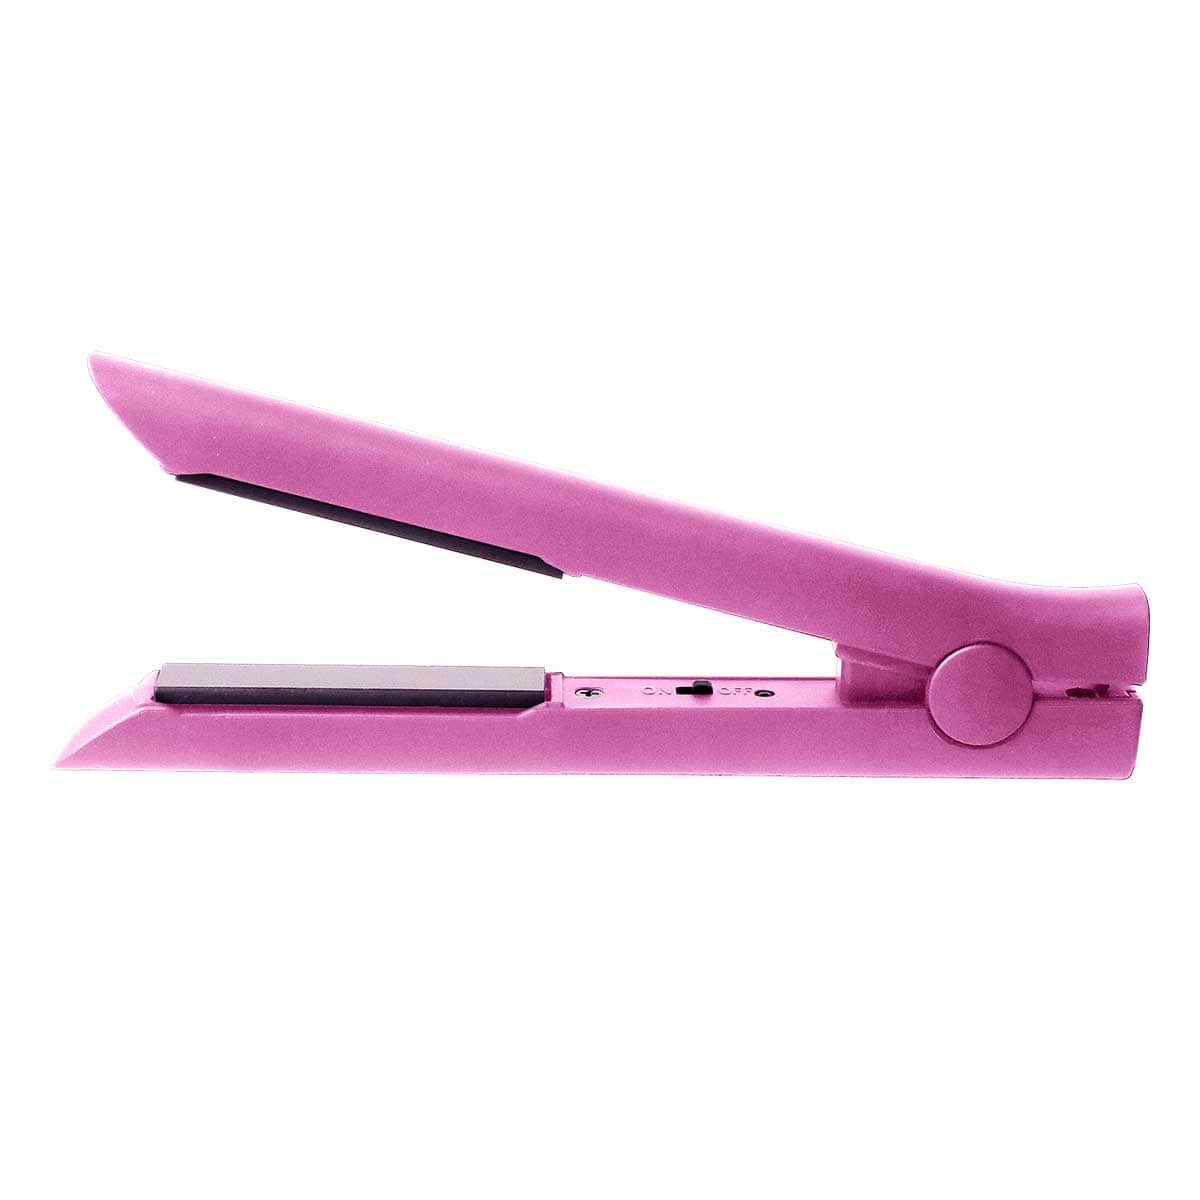 Ariabeauty Hair Straightener - Hair Iron Pink Hair Tools Travel Set - Mini Blow Dryer & Hair Straightener